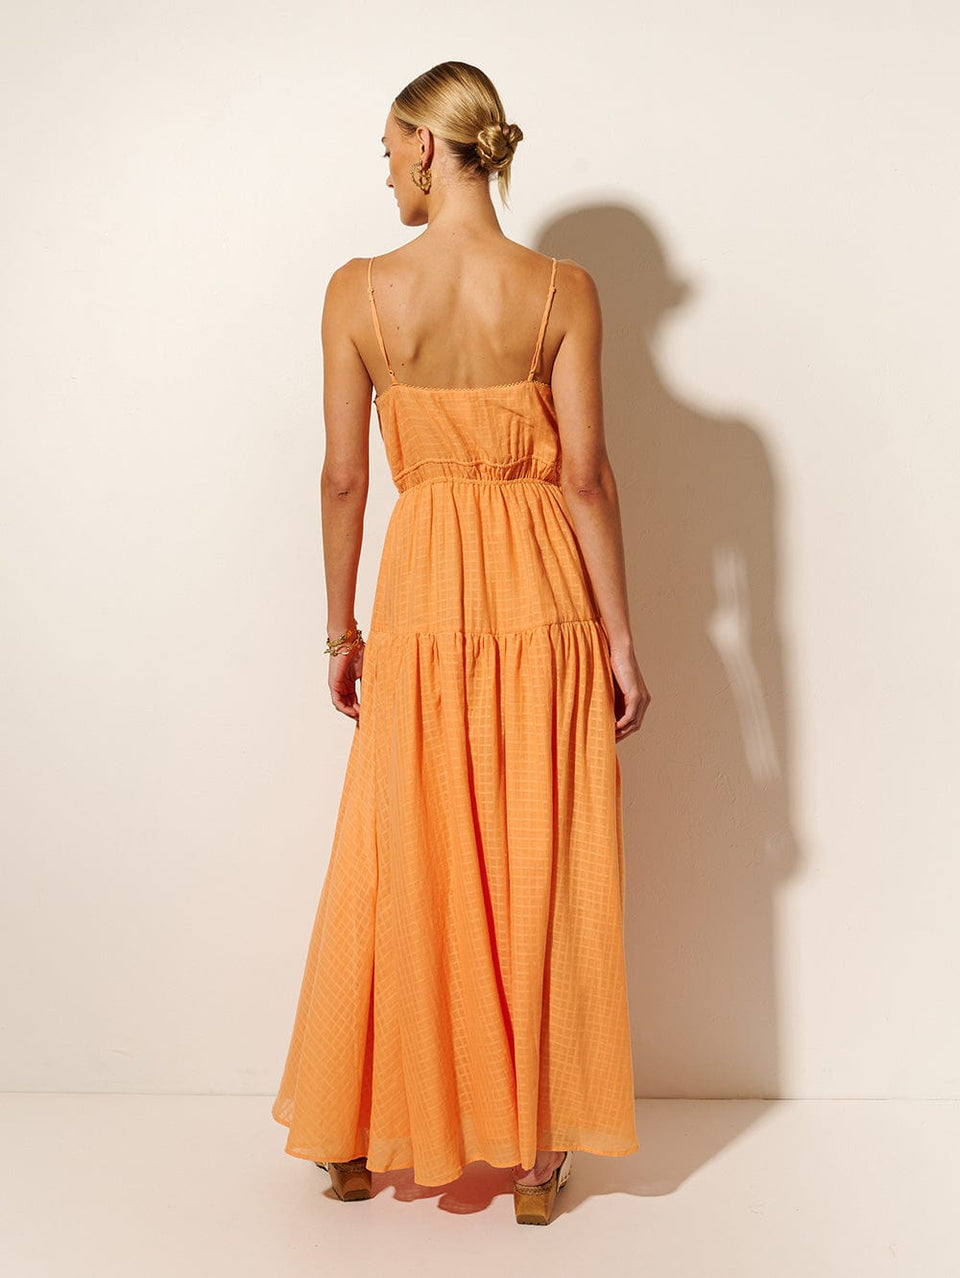 KIVARI Chantelle Maxi Dress | Model wears Peach Maxi Dress Back View